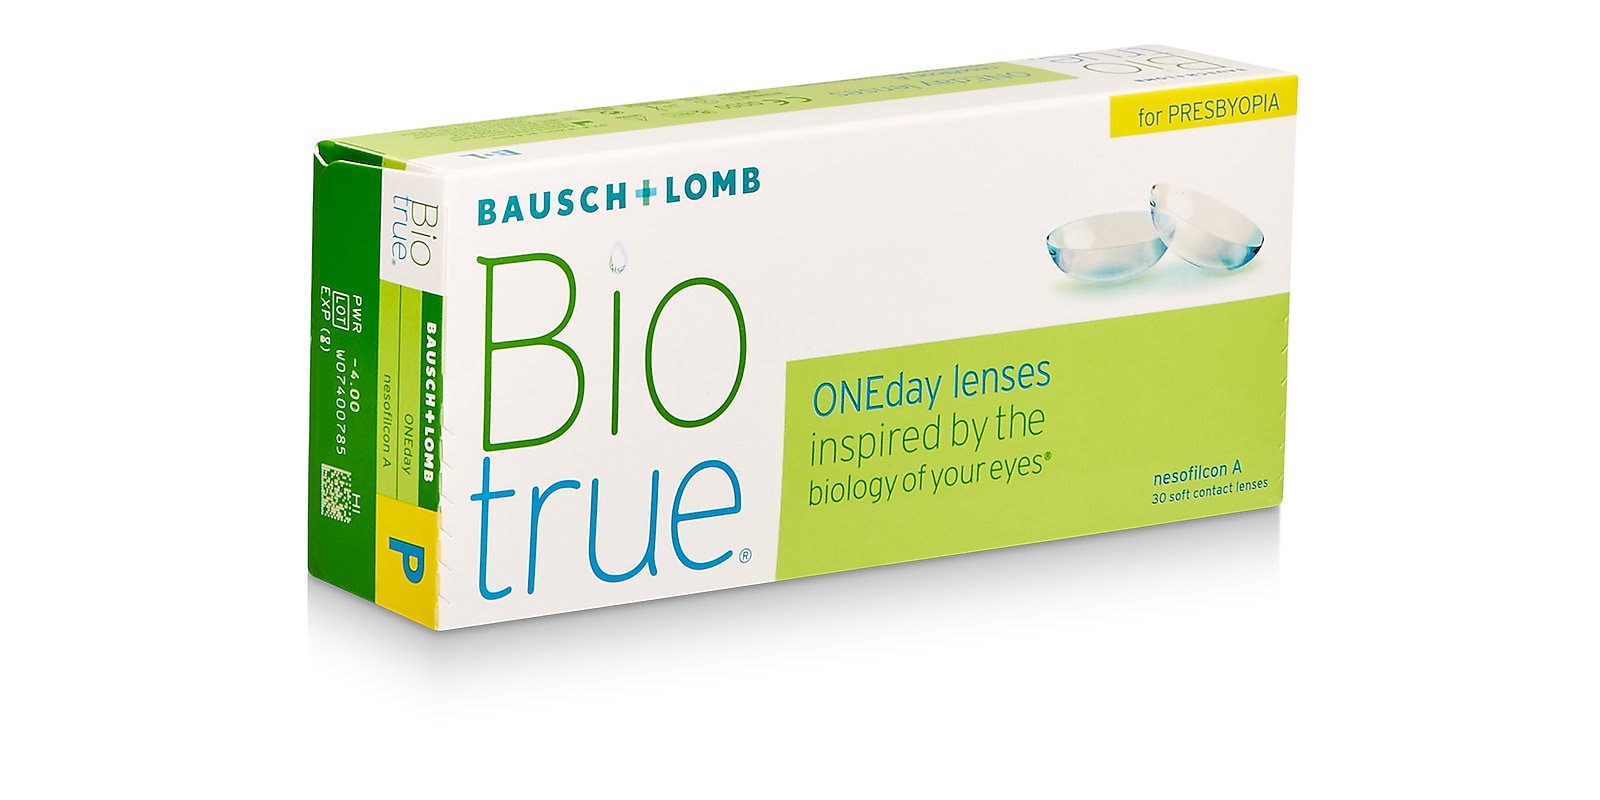 Biotrue OneDay for Presbyopia, 30 pack contact lenses